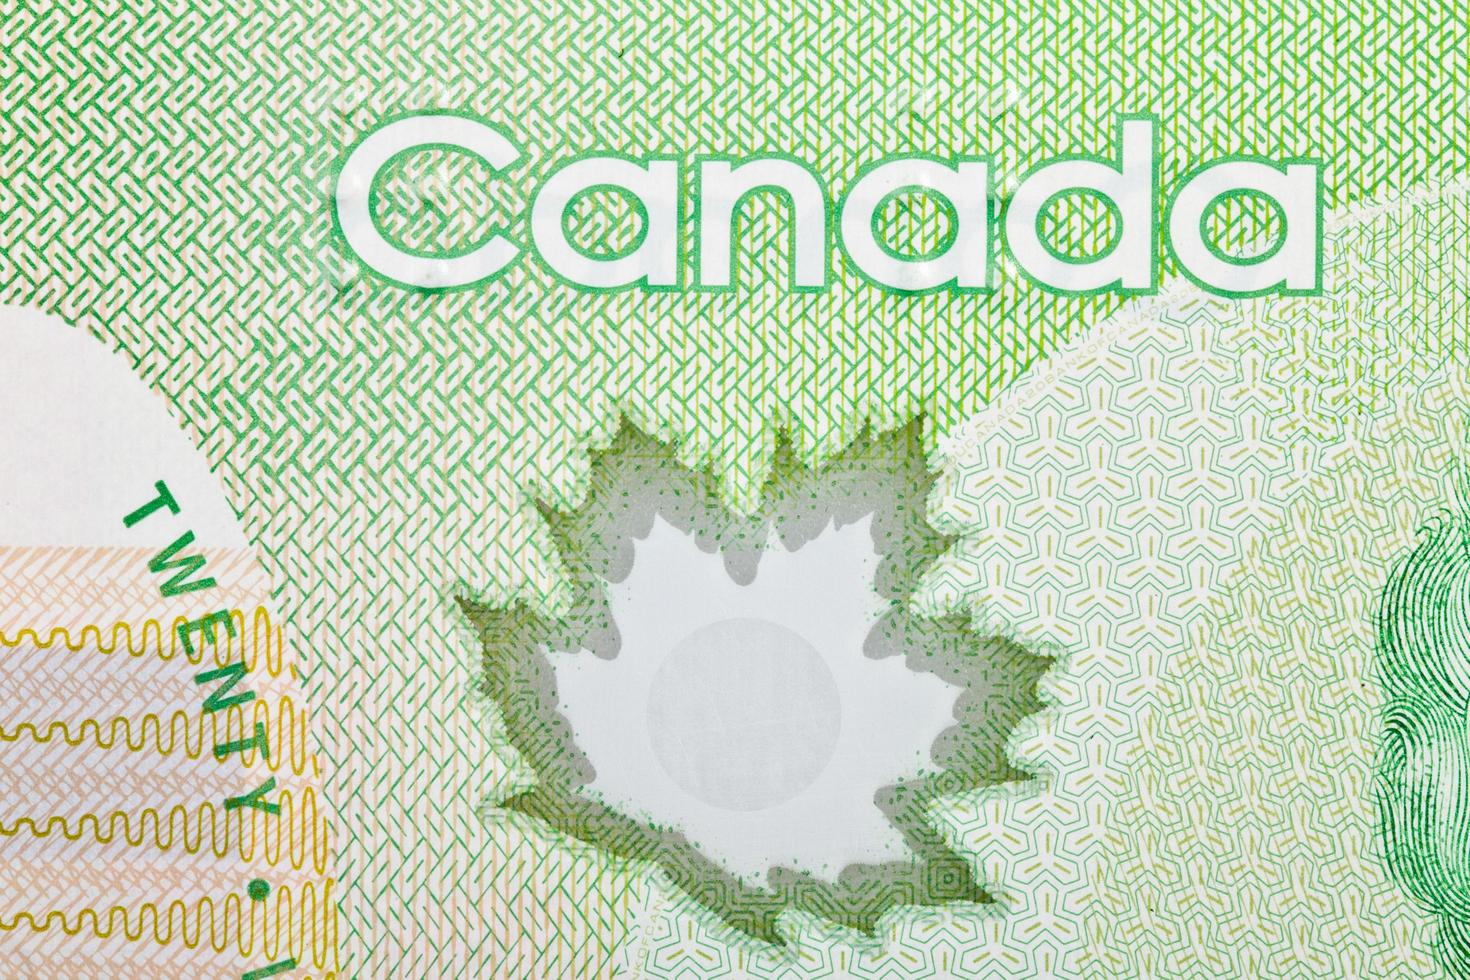 Ottawa, Canada, 13 april 2013, extreme close-up van nieuwe polymeer twintig dollarbiljetten foto